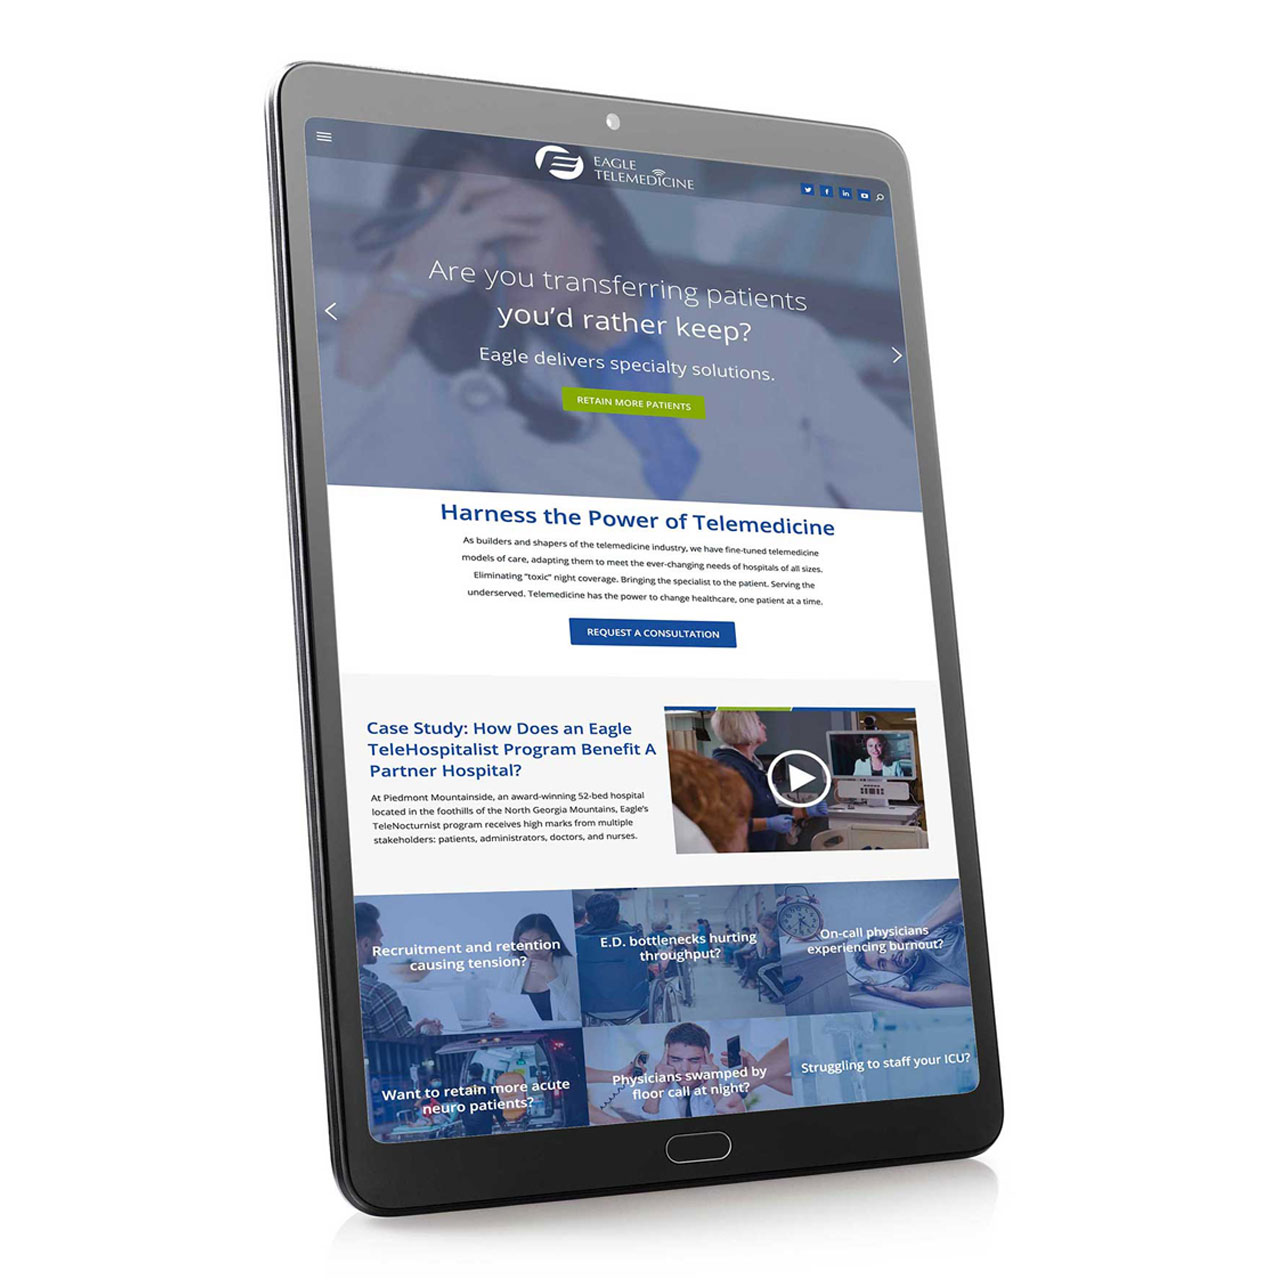 Eagle Telemedicine website shown on tablet device